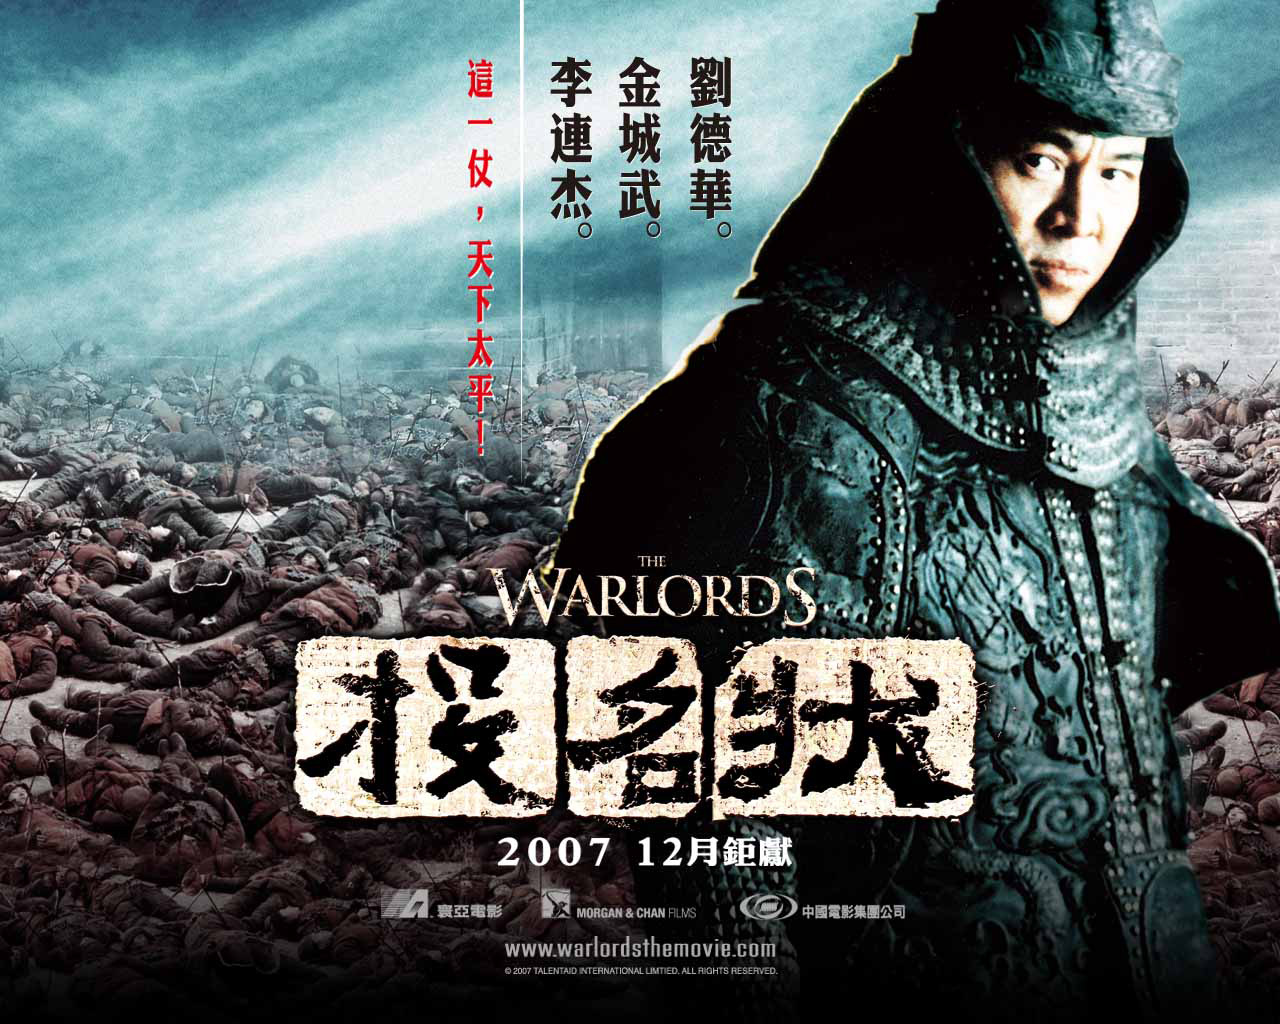 Download High quality Tau Ming Chong wallpaper / Movies / 1280x1024